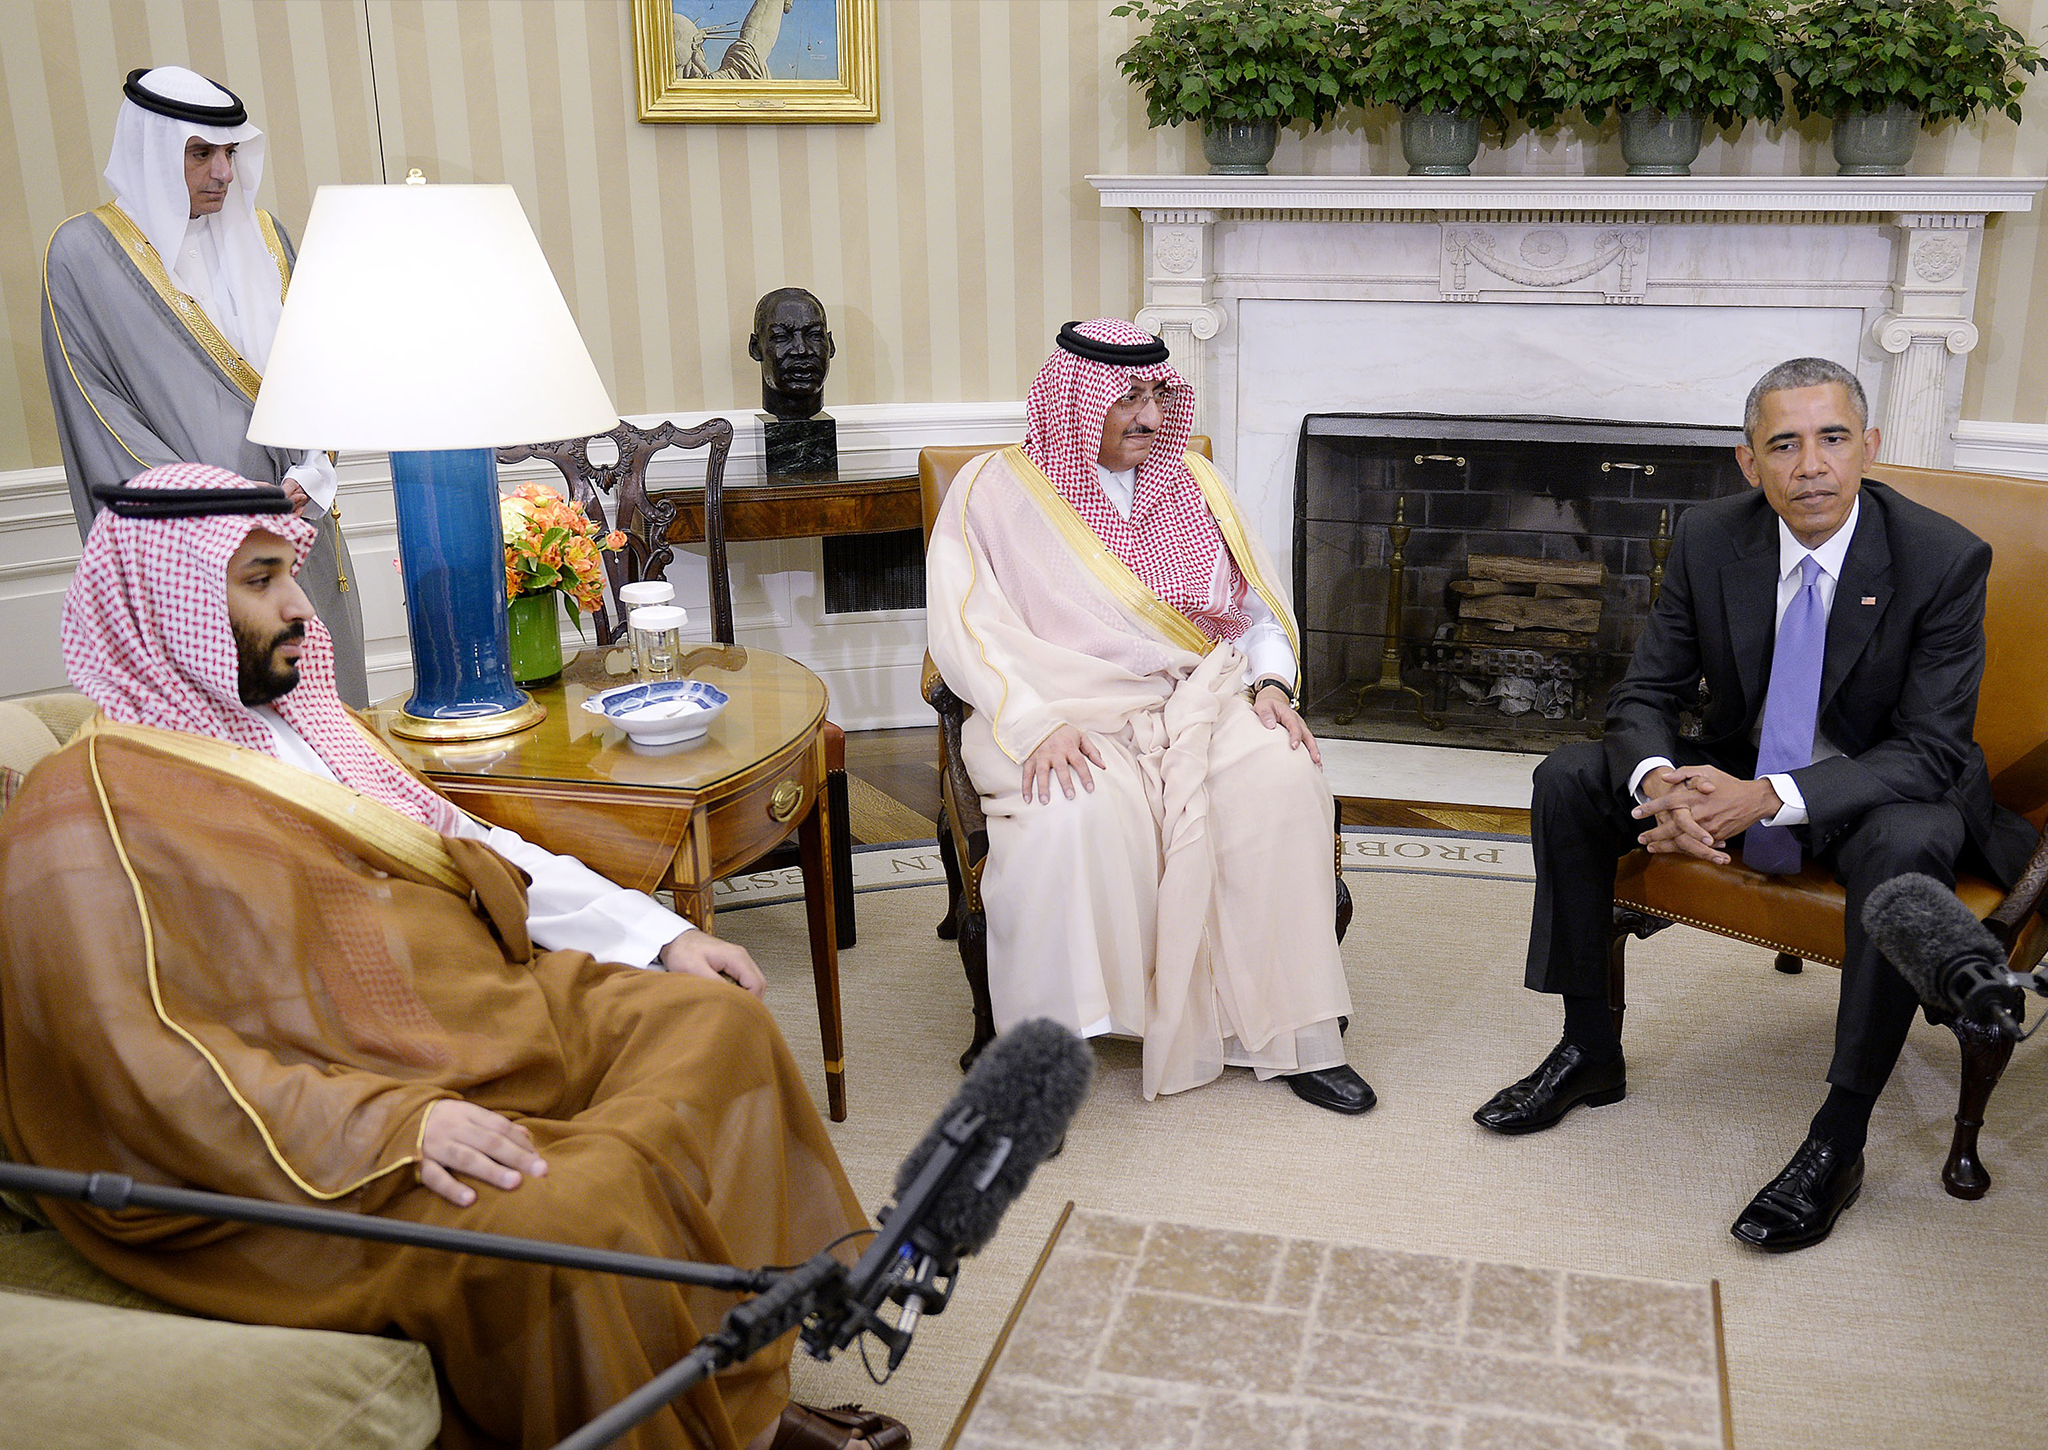 Barack Obama holds a meeting with Crown Prince Mohammed bin Nayef and Deputy Crown Prince Mohammed bin Salman of Saudi Arabia